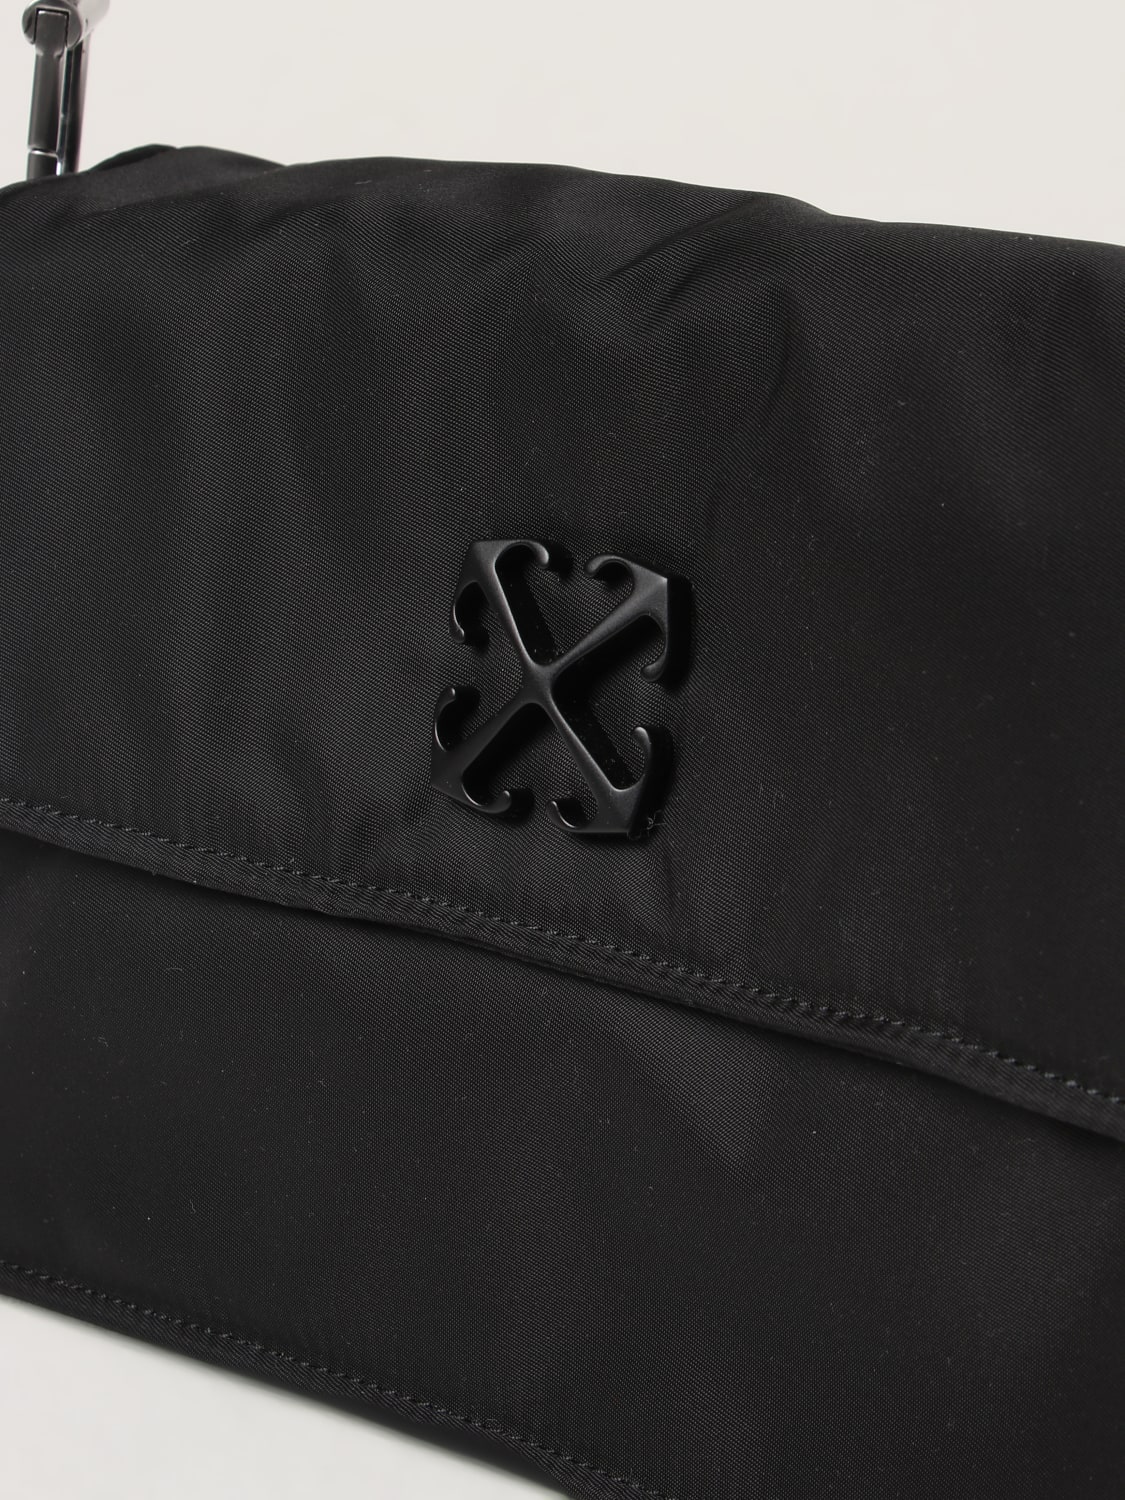 OFF-WHITE: Jitney 1.4 nylon bag with shoulder strap - Black